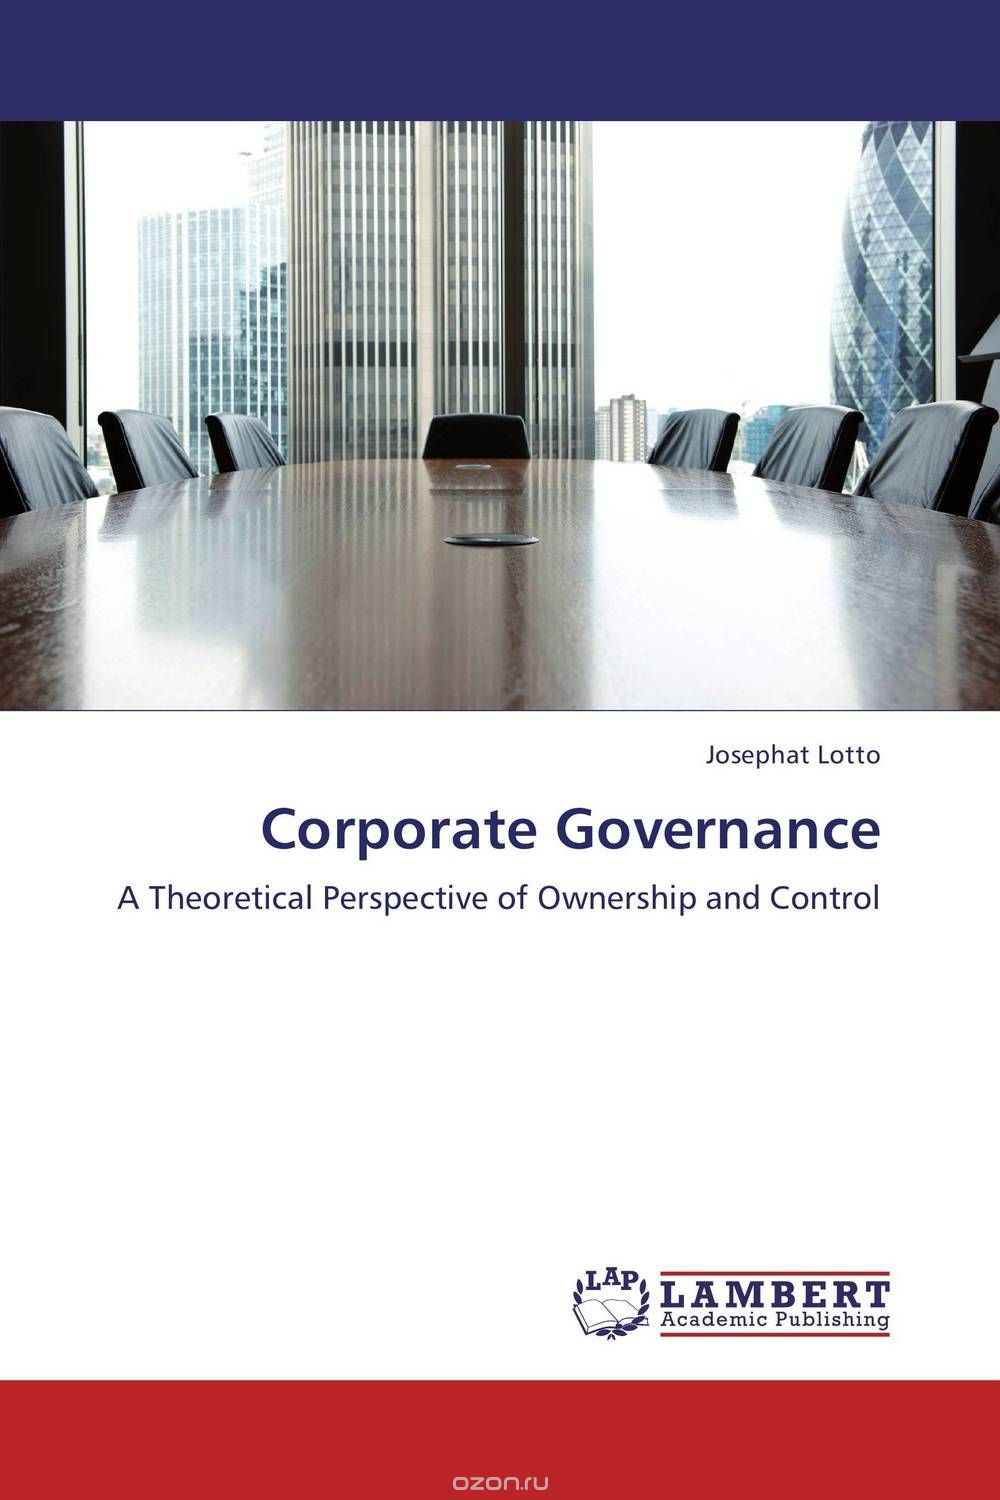 Скачать книгу "Corporate Governance"